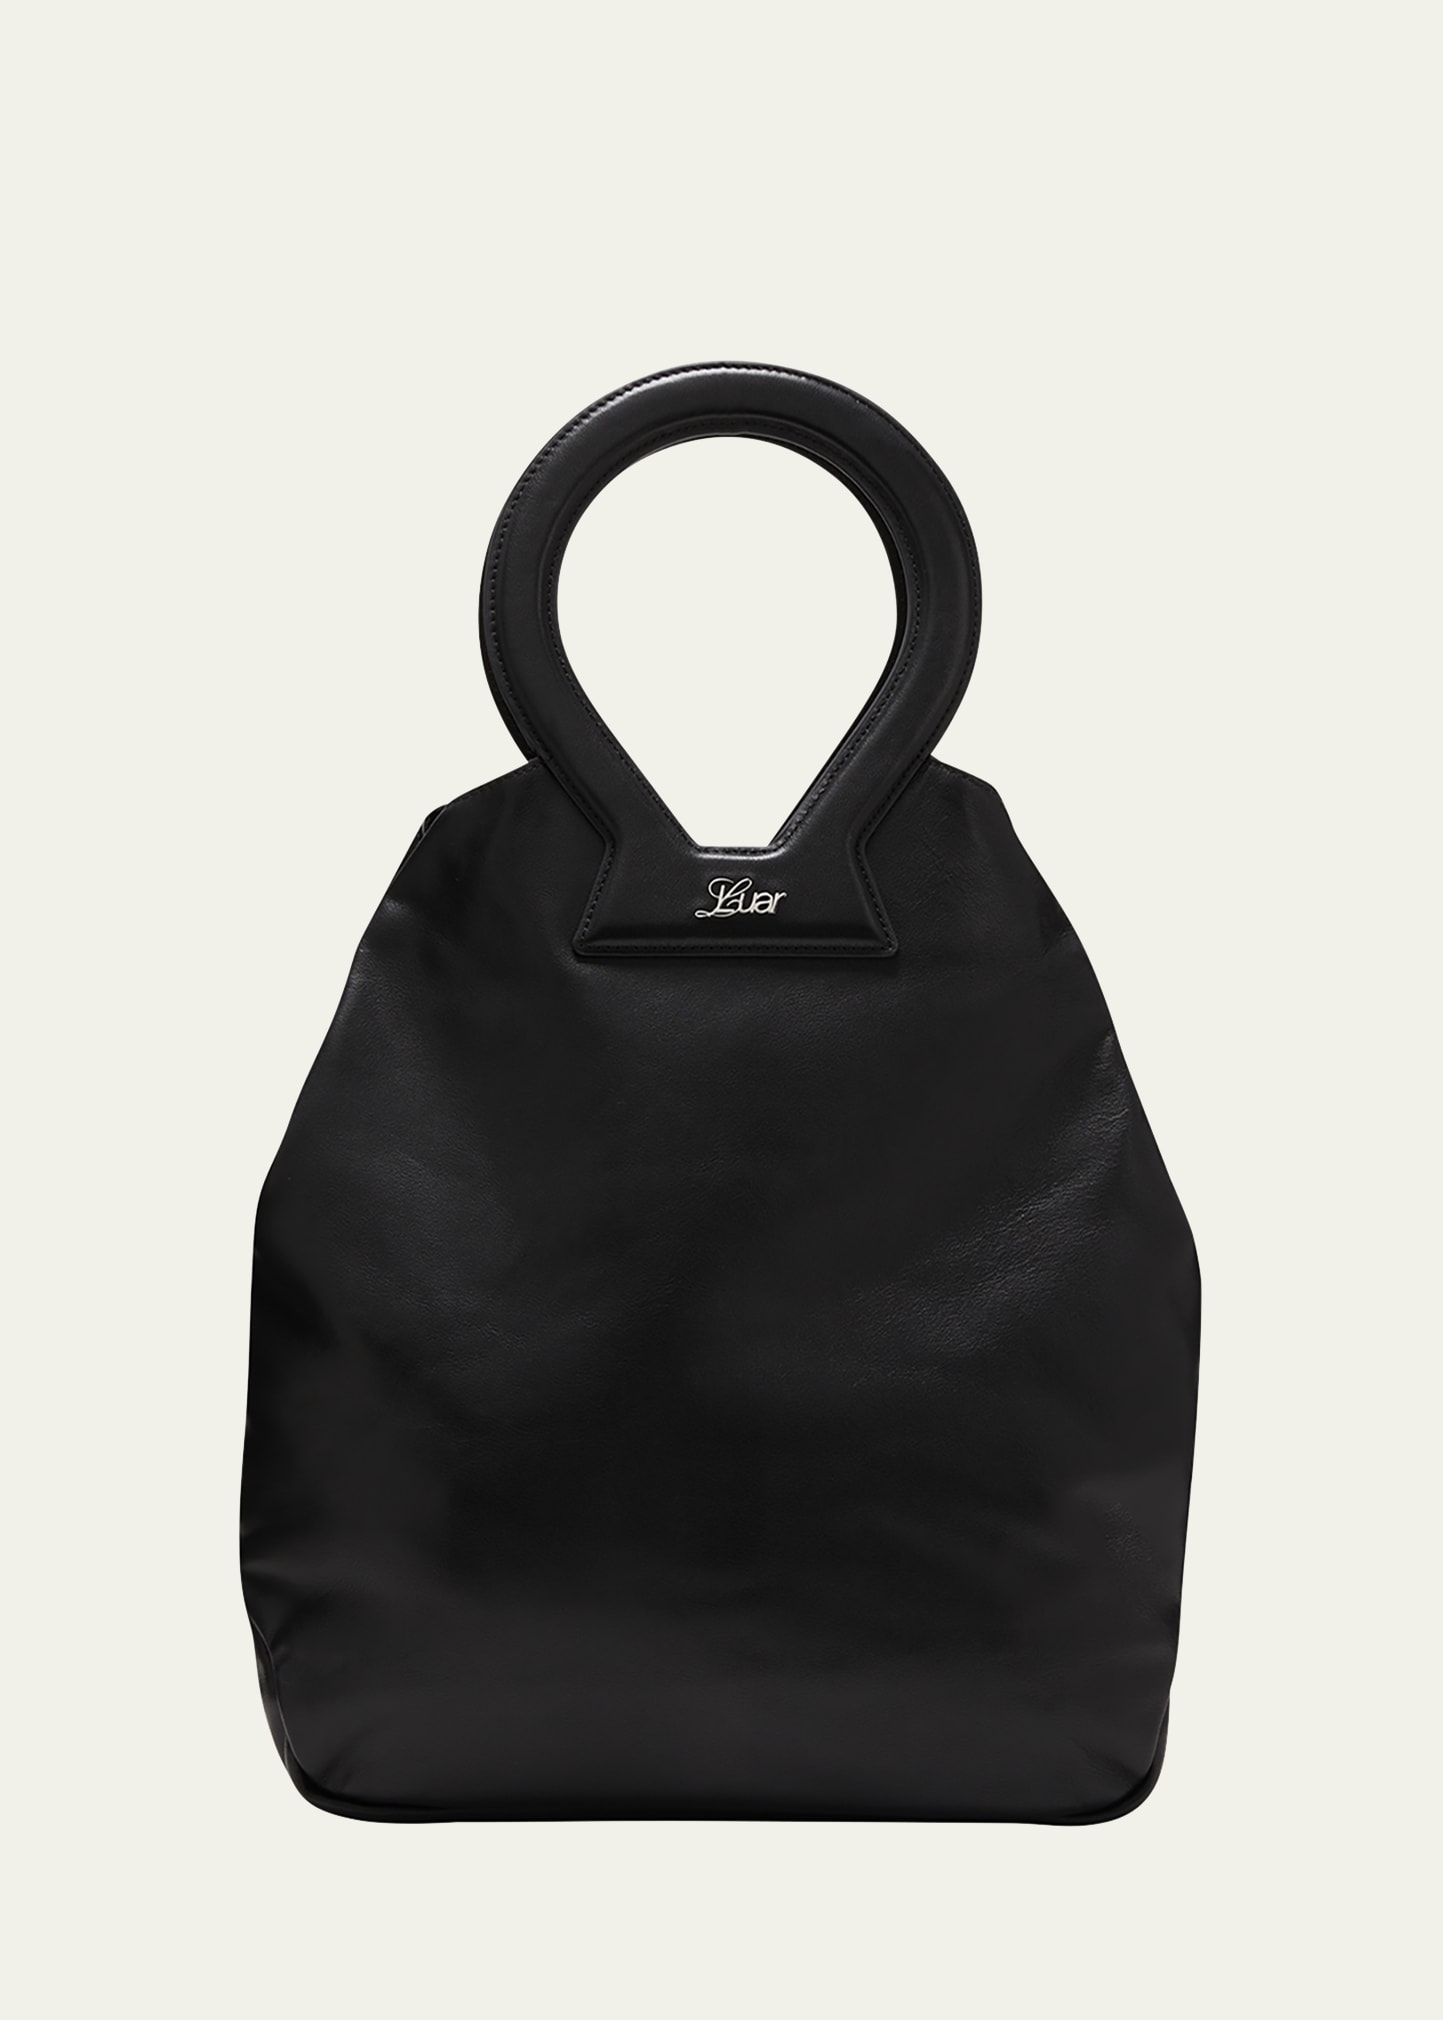 Luar The Brooke Leather Hobo Bag